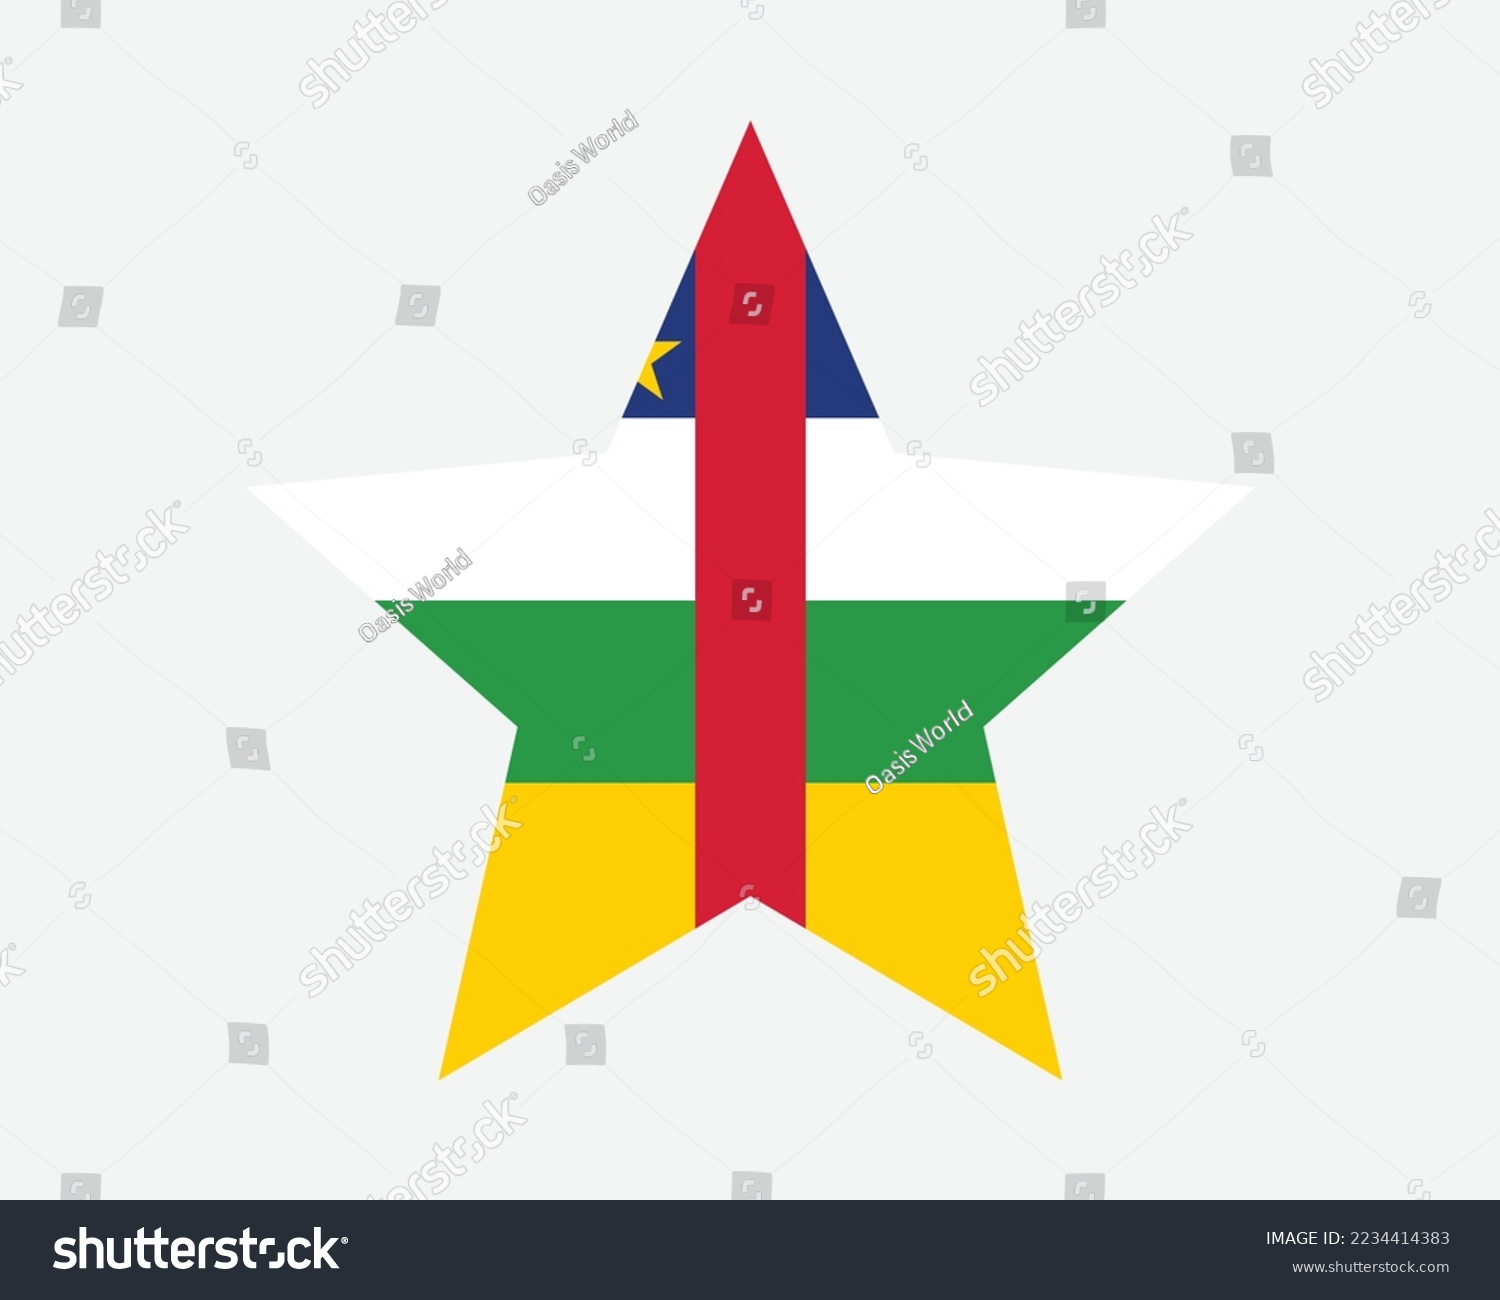 SVG of Central African Republic Star Flag. Centrafrique Star Shape Flag. CAR Country National Banner Icon Symbol Vector 2D Flat Artwork Graphic Illustration svg